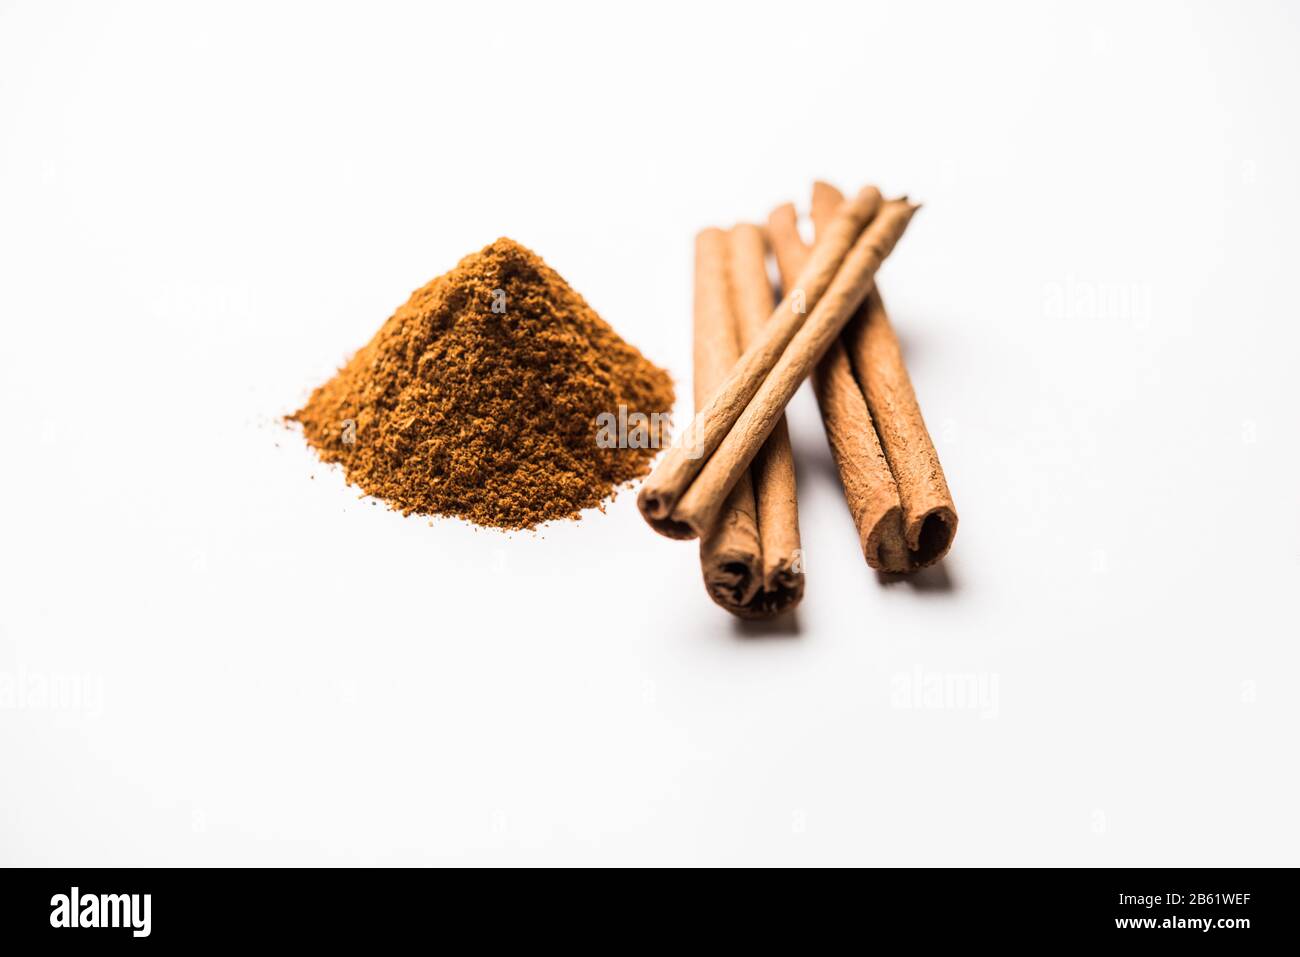 Powder cinnamon and sticks also known as Dalchini or Dalcheenee masala from India, selective focus Stock Photo